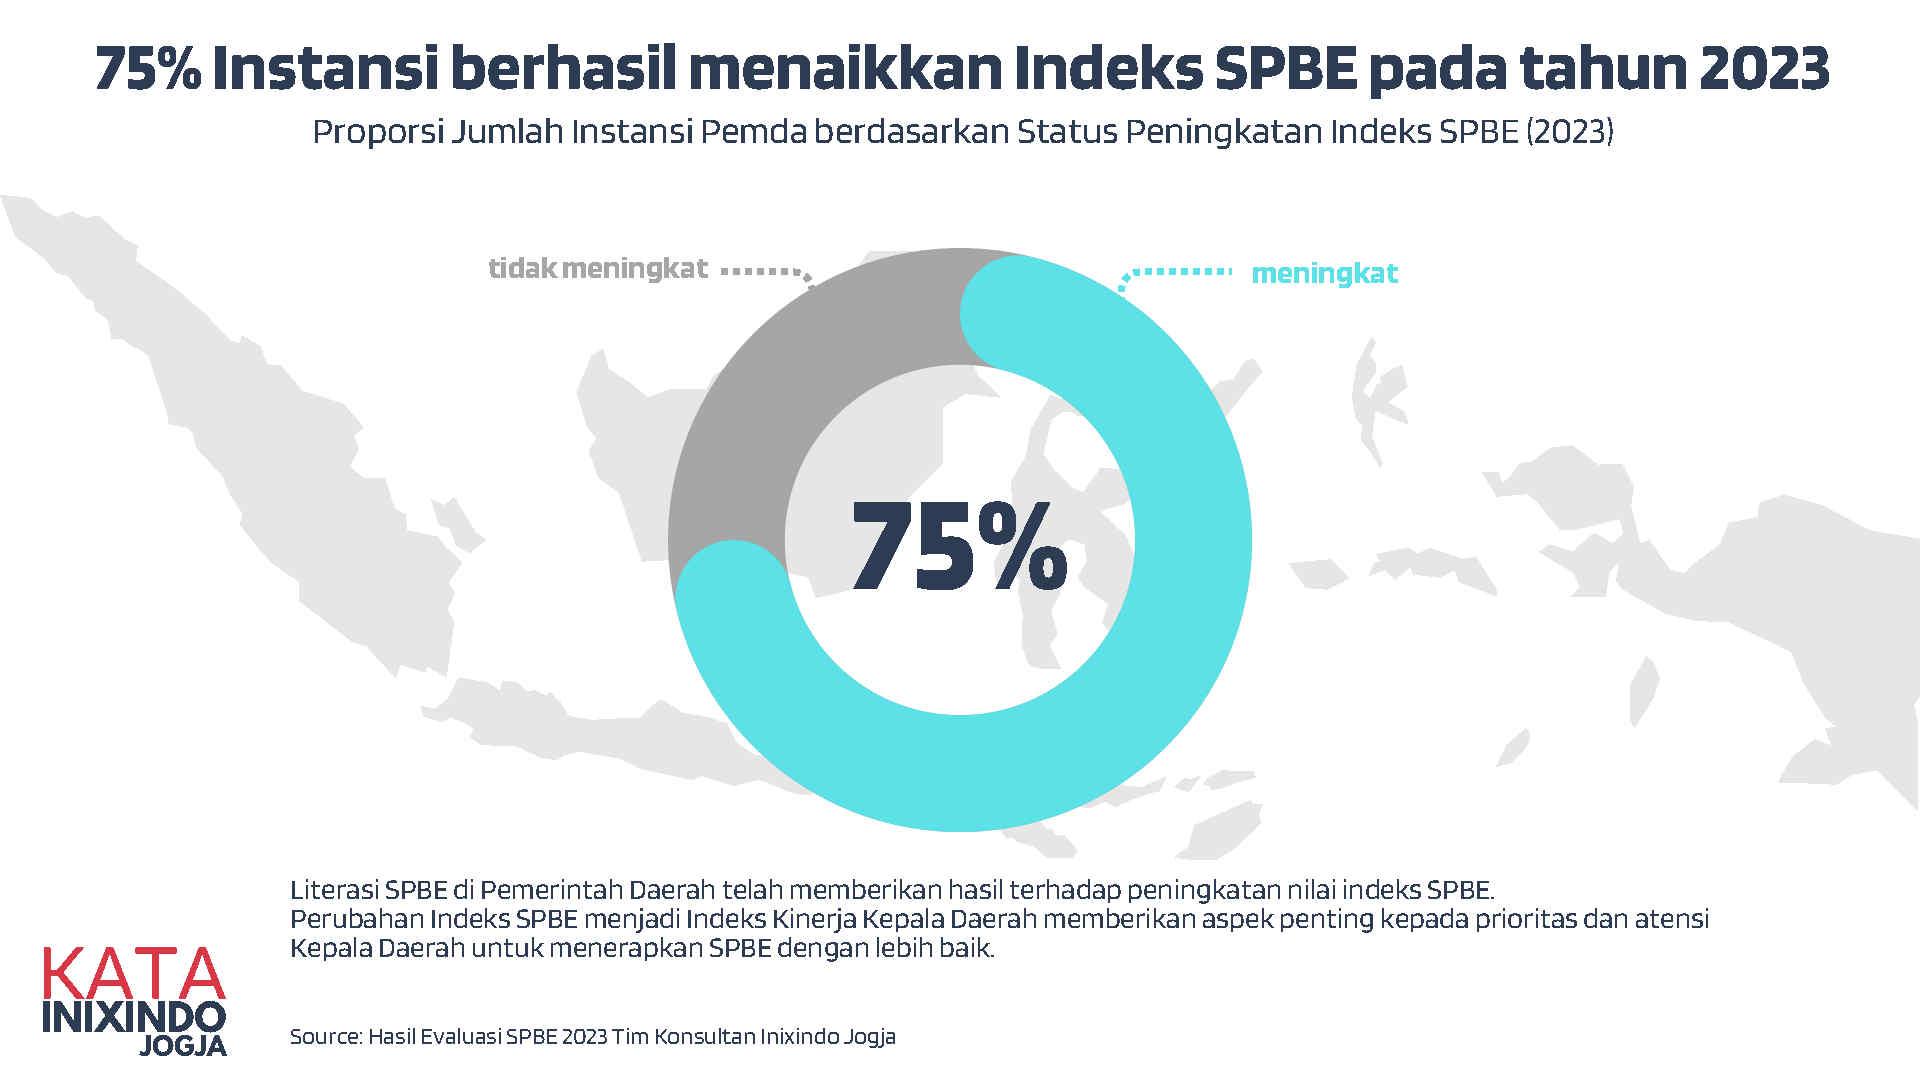 Proporsi jumlah instansi Pemda berdasarkan status peningkatan indeks SPBE (2023)